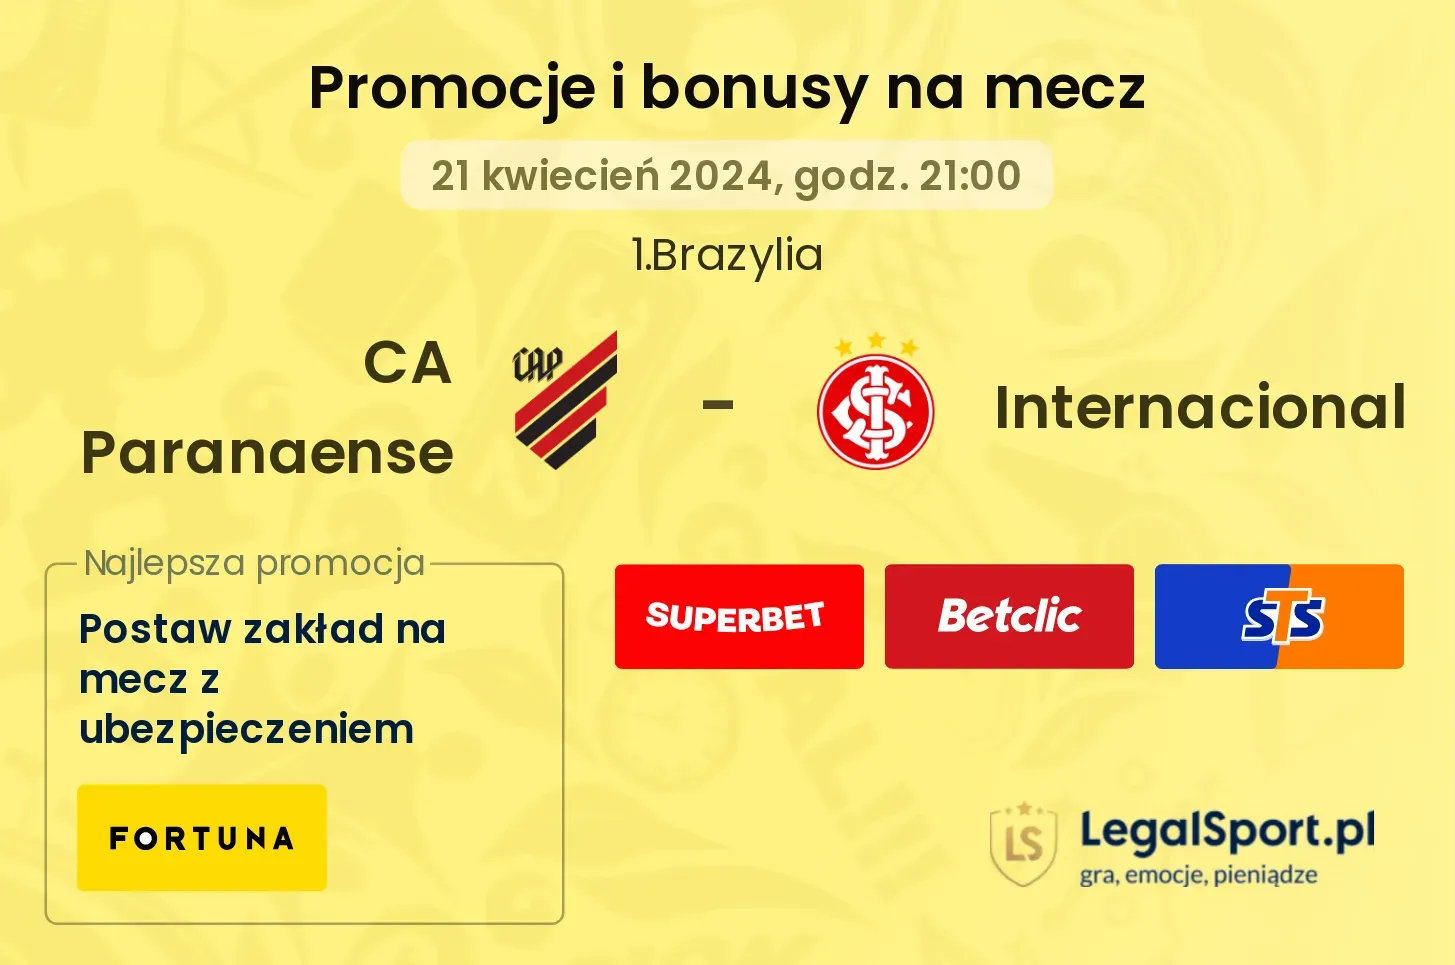 CA Paranaense - Internacional promocje bonusy na mecz